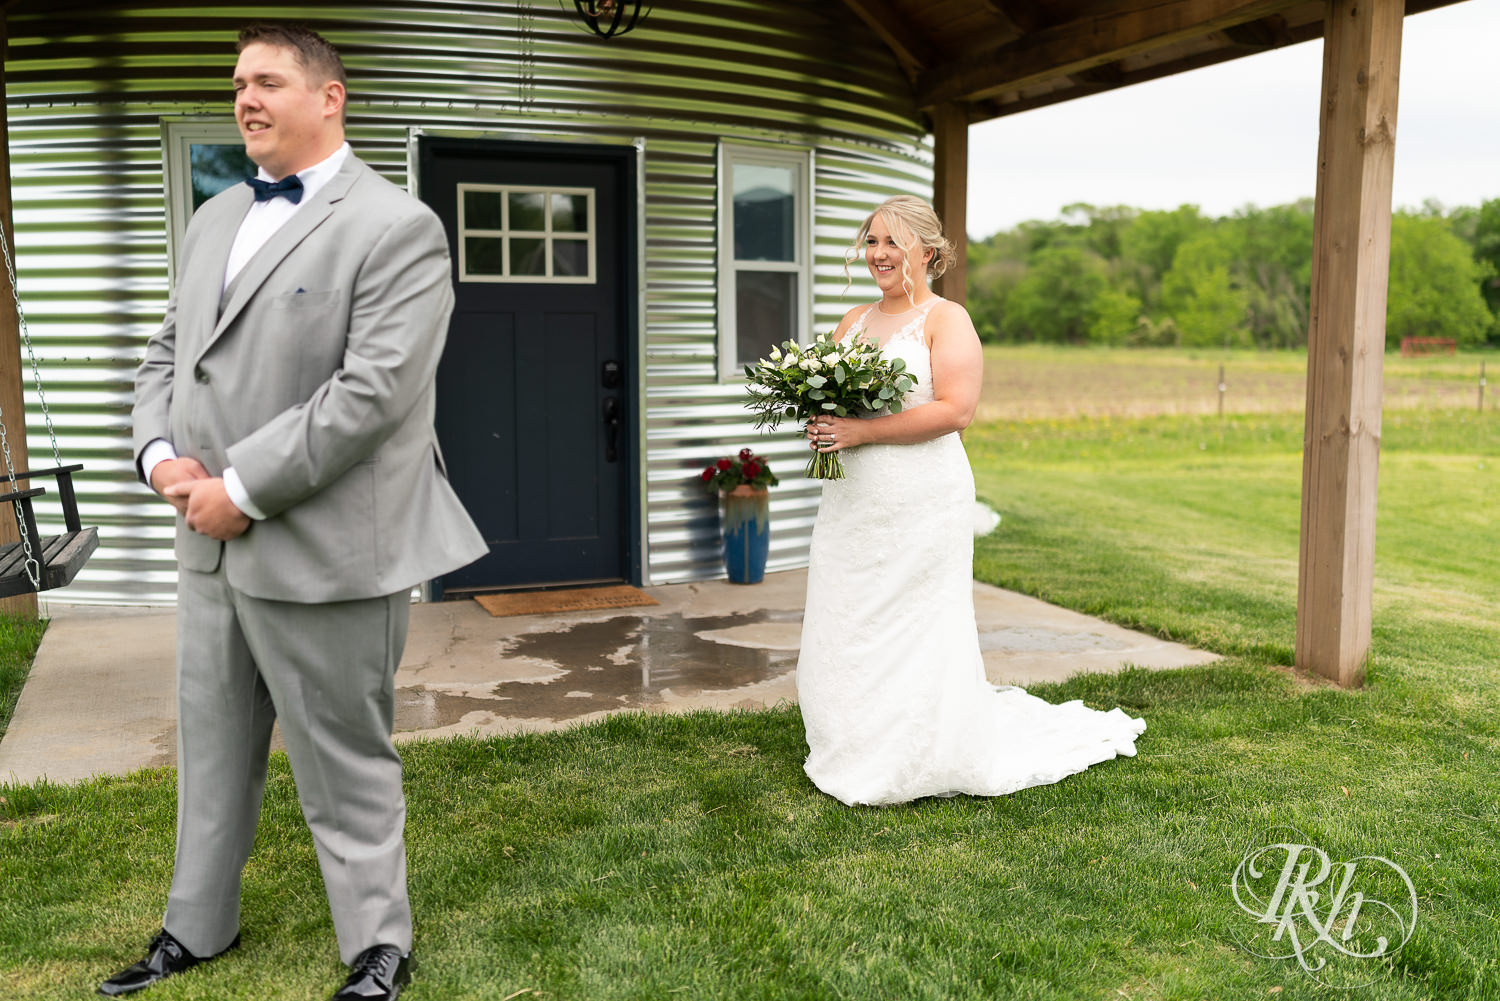 First look between bride and groom at Barn at Mirror Lake in Mondovi, Wisconsin.